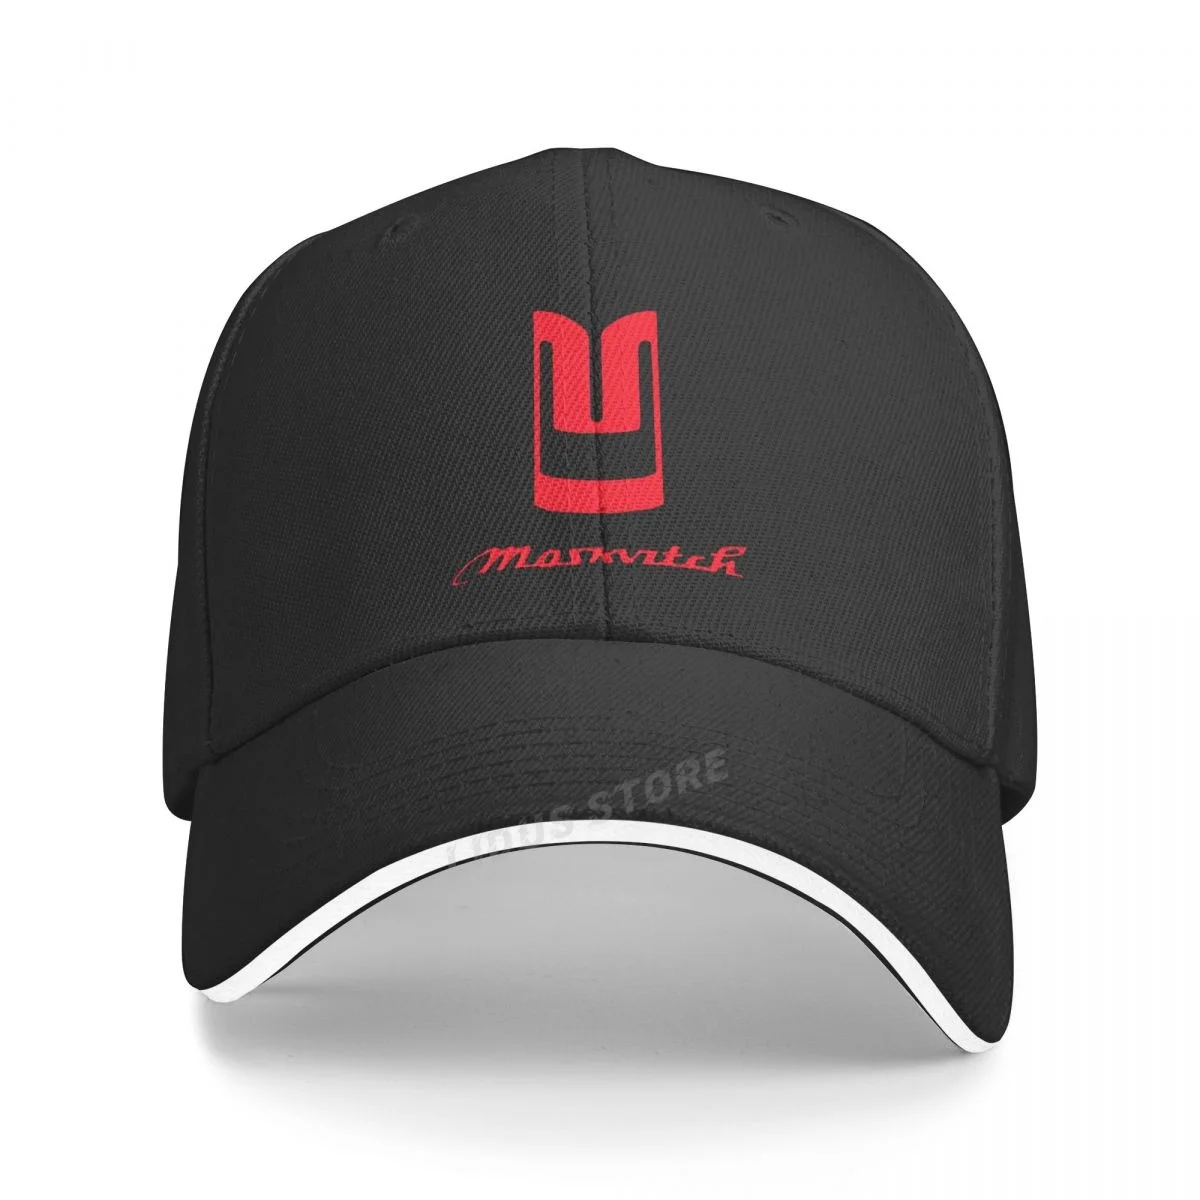 Moskvich Baseball Caps Adult Hats Adjustable Fashion Outdoor Caps